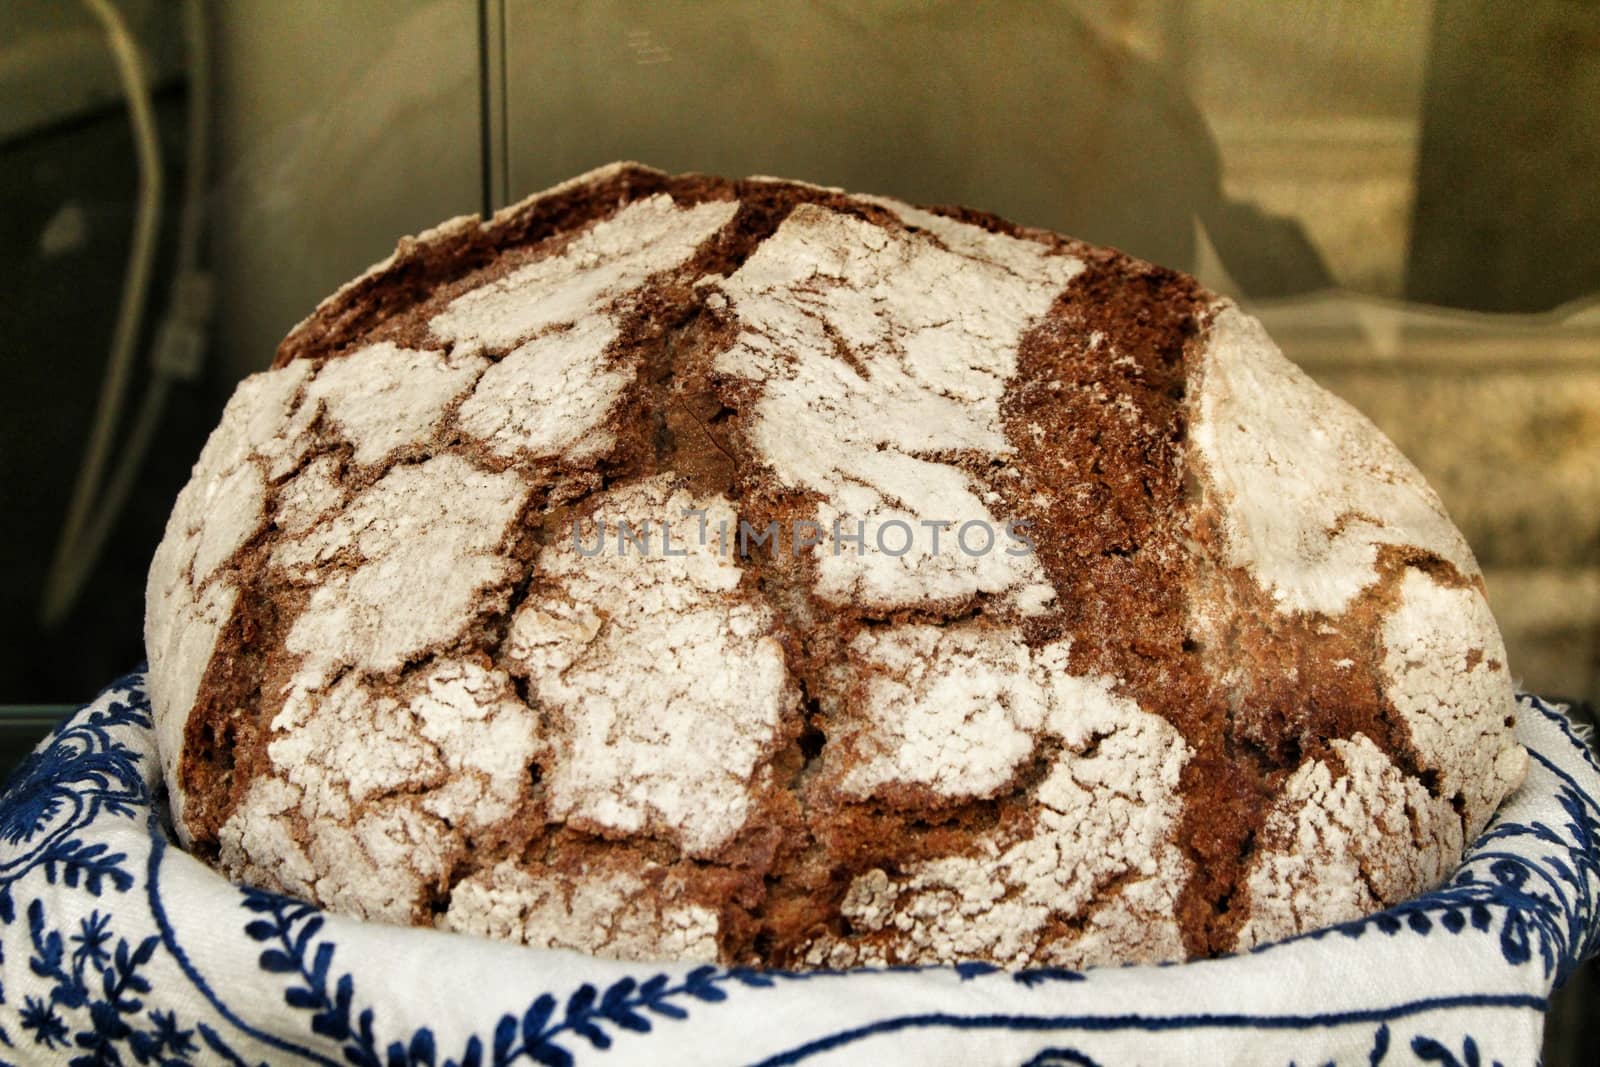 Loaf of tasty bread in a bakery showcase by soniabonet